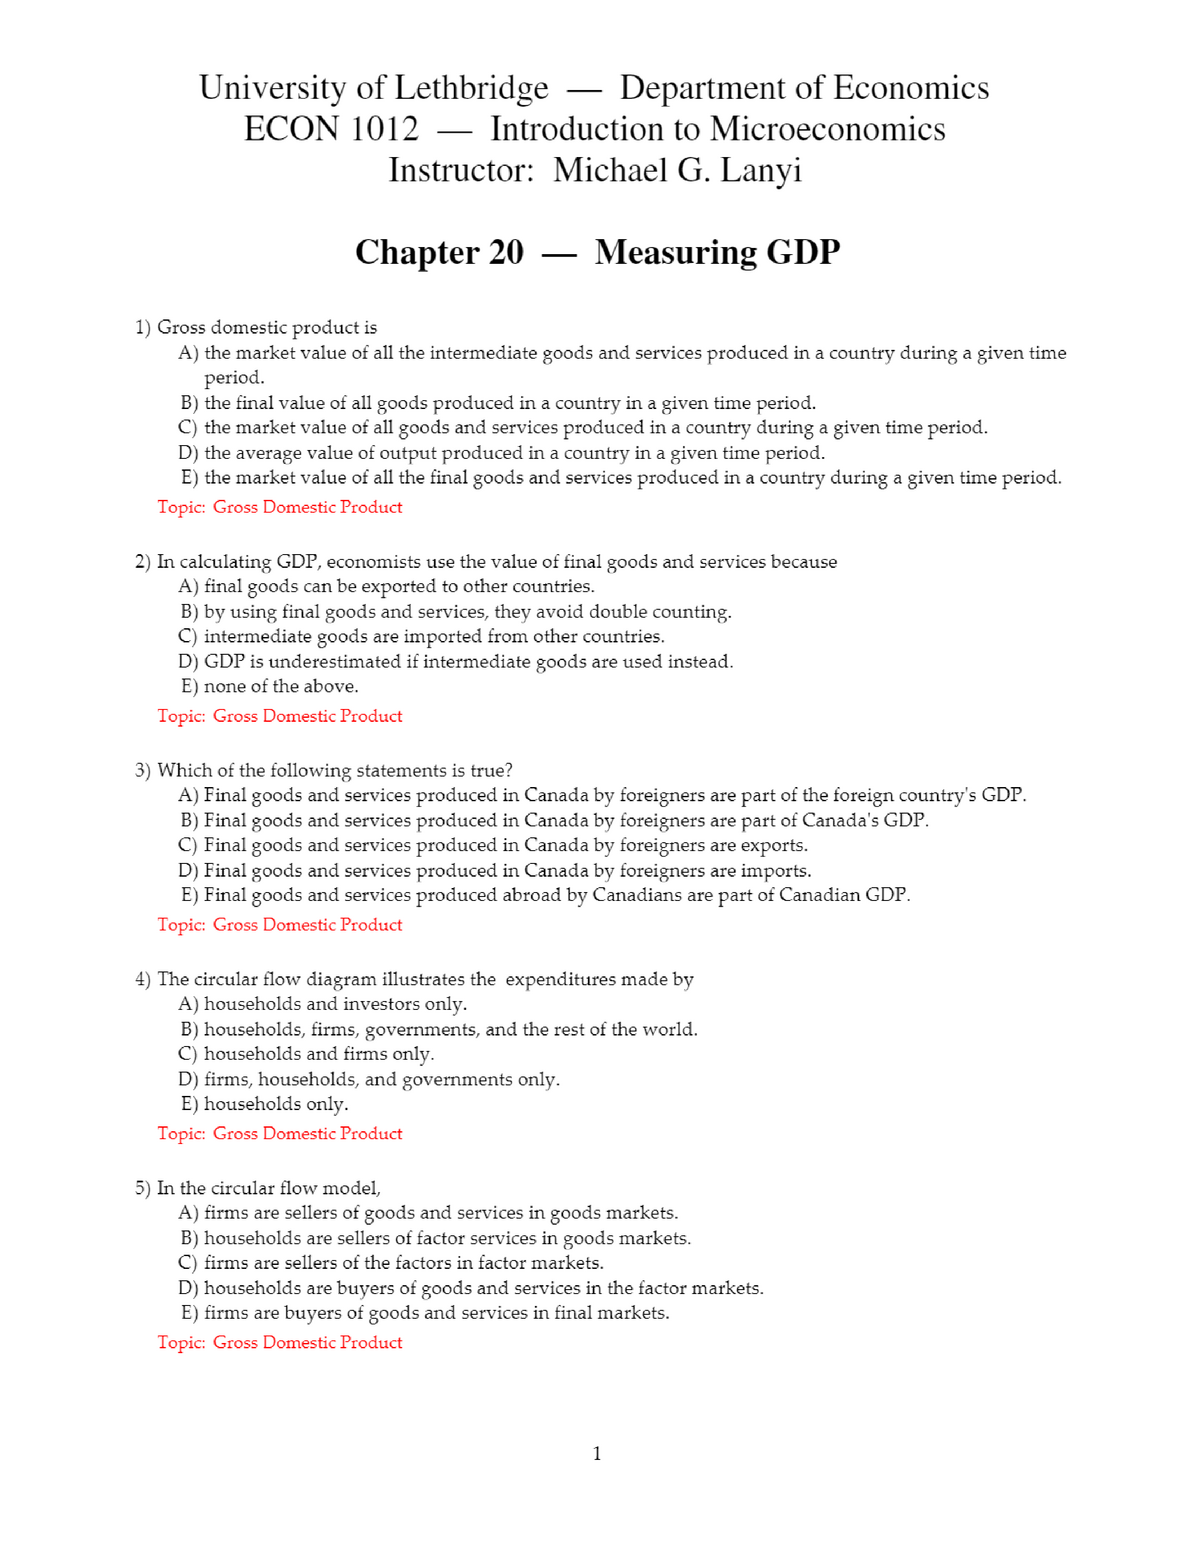 GDP practice questions Introduction to Macroeconomics StuDocu